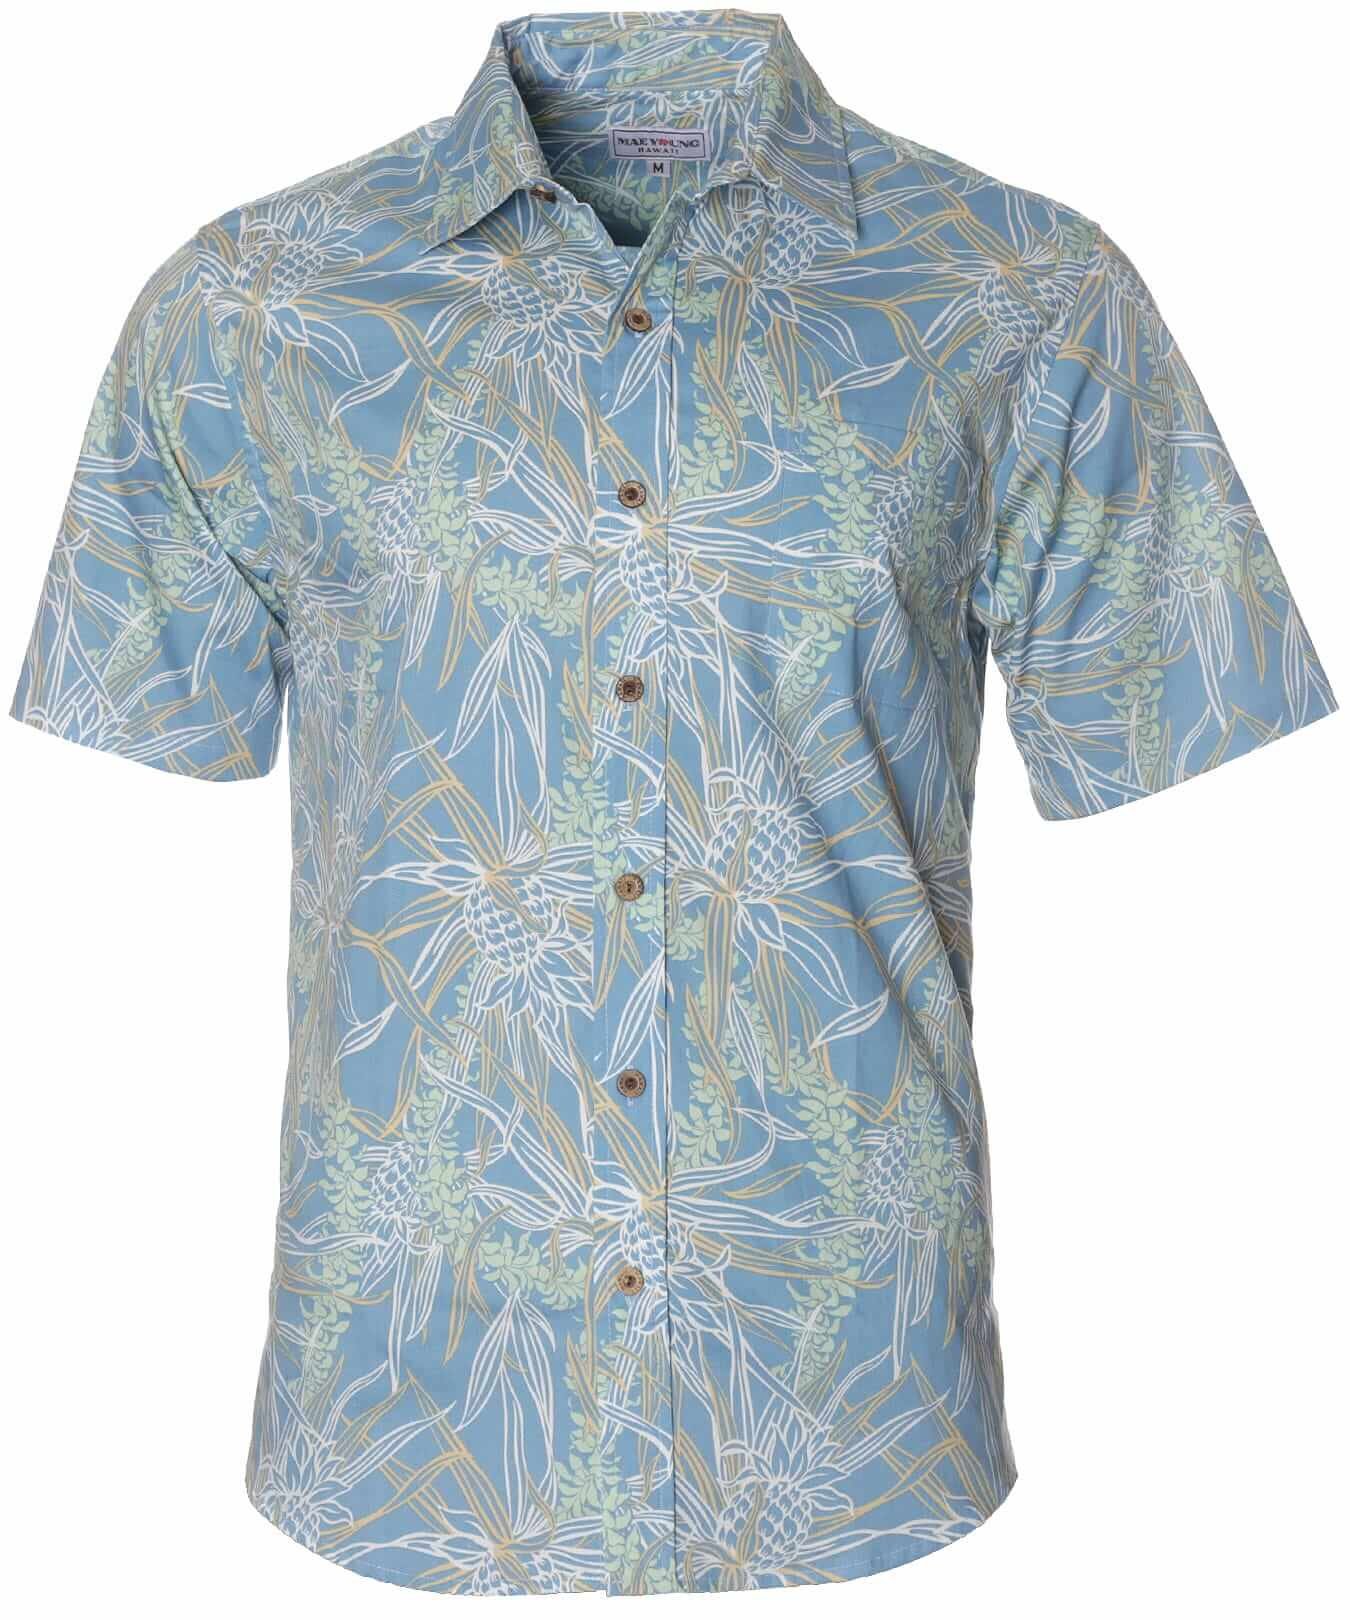 100% Cotton Resort Pineapples Aloha Shirt Light Blue